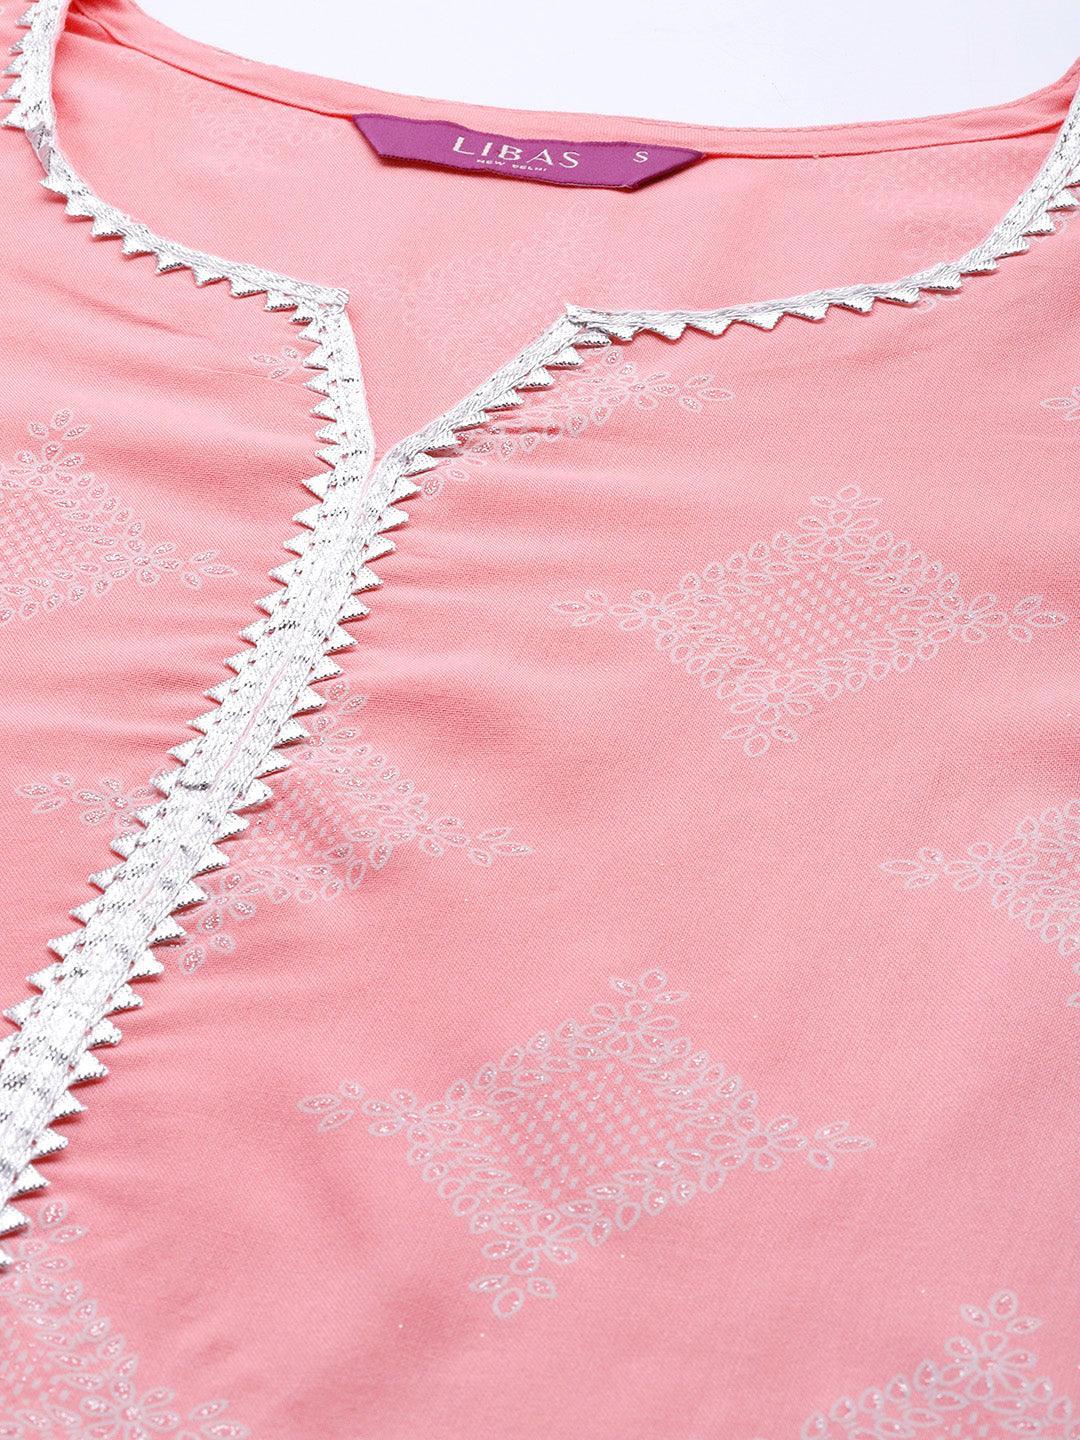 Pink Printed Viscose Rayon Suit Set - ShopLibas